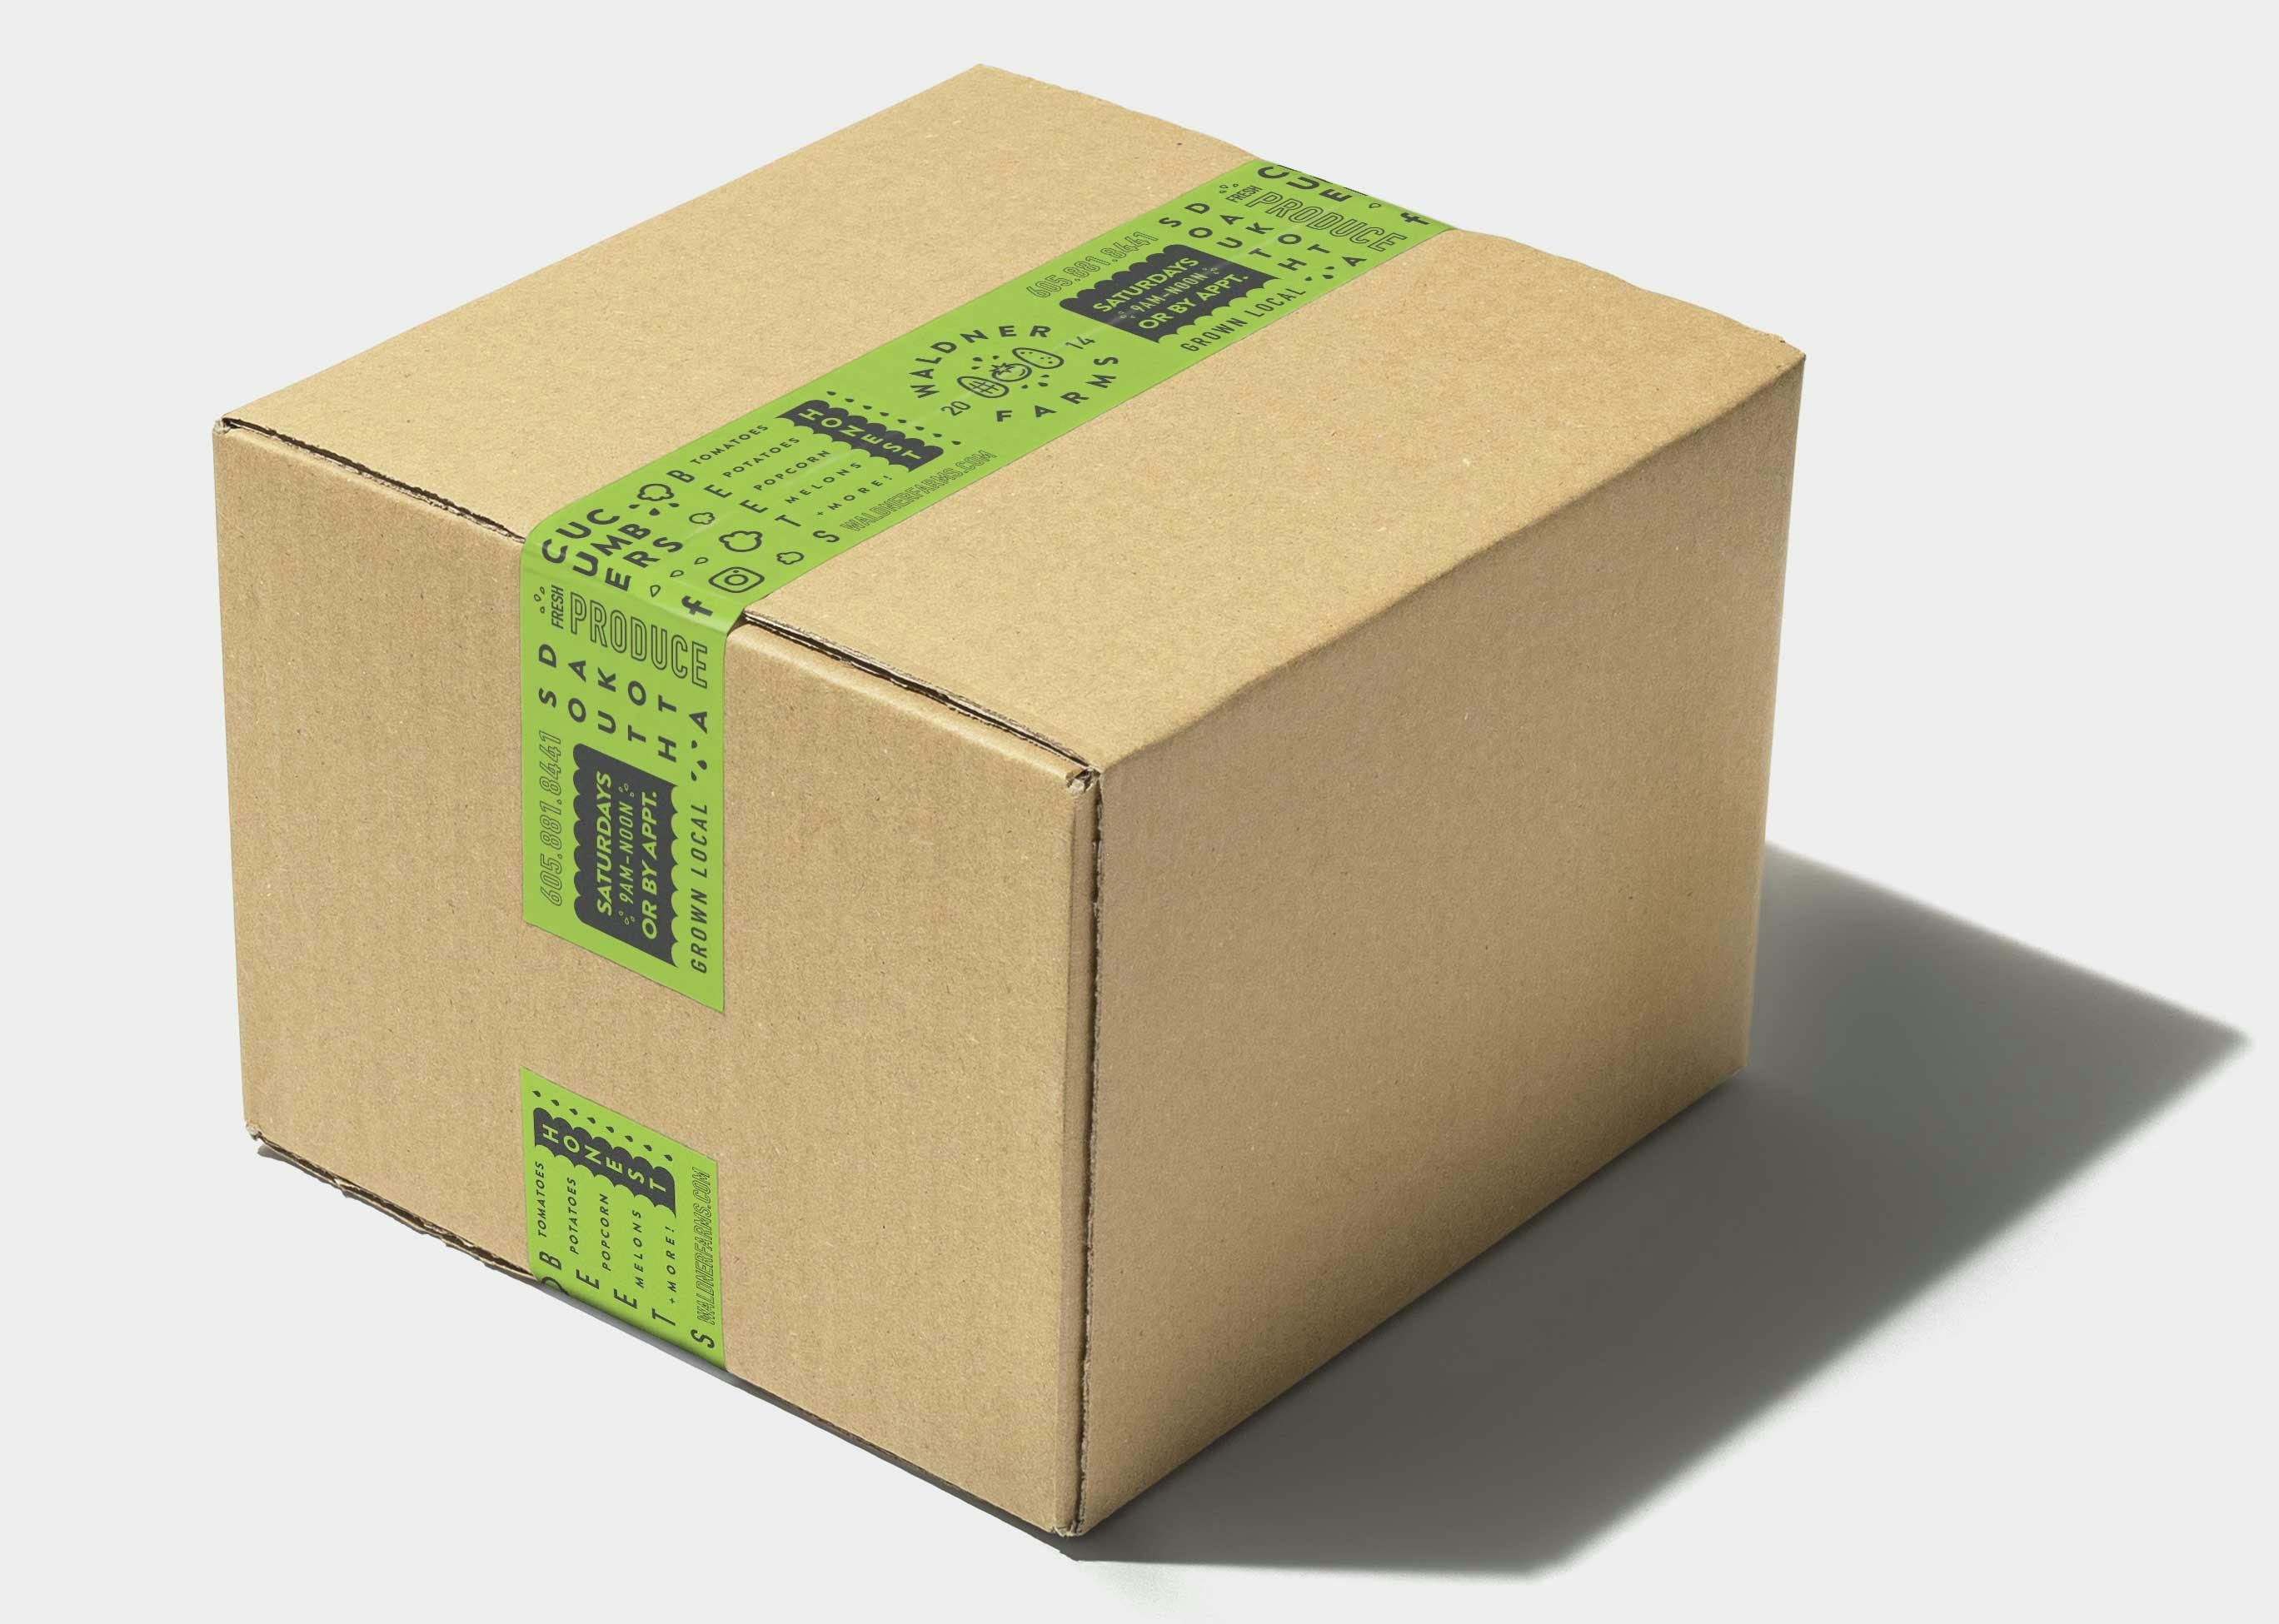 Waldner farms packaging tape box